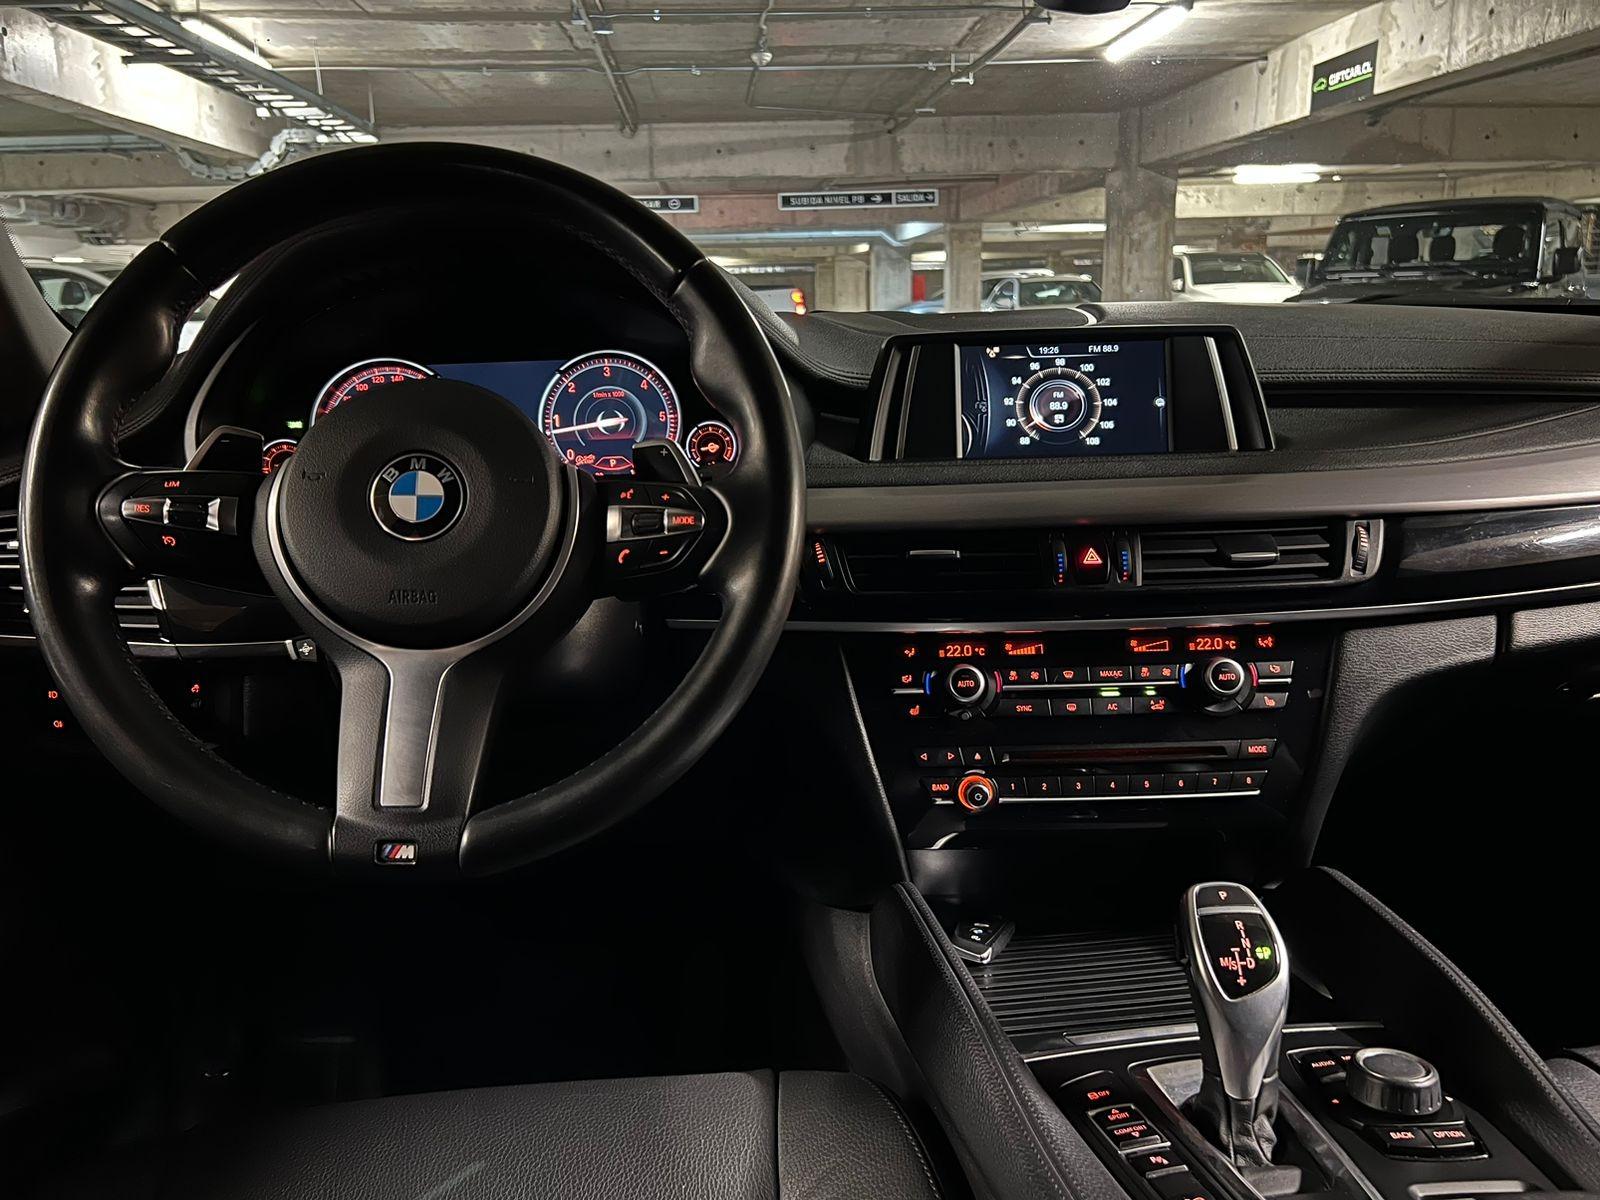 BMW X6 DIÉSEL 30d 2017 MANTENIMIENTO EN WBM - FULL MOTOR